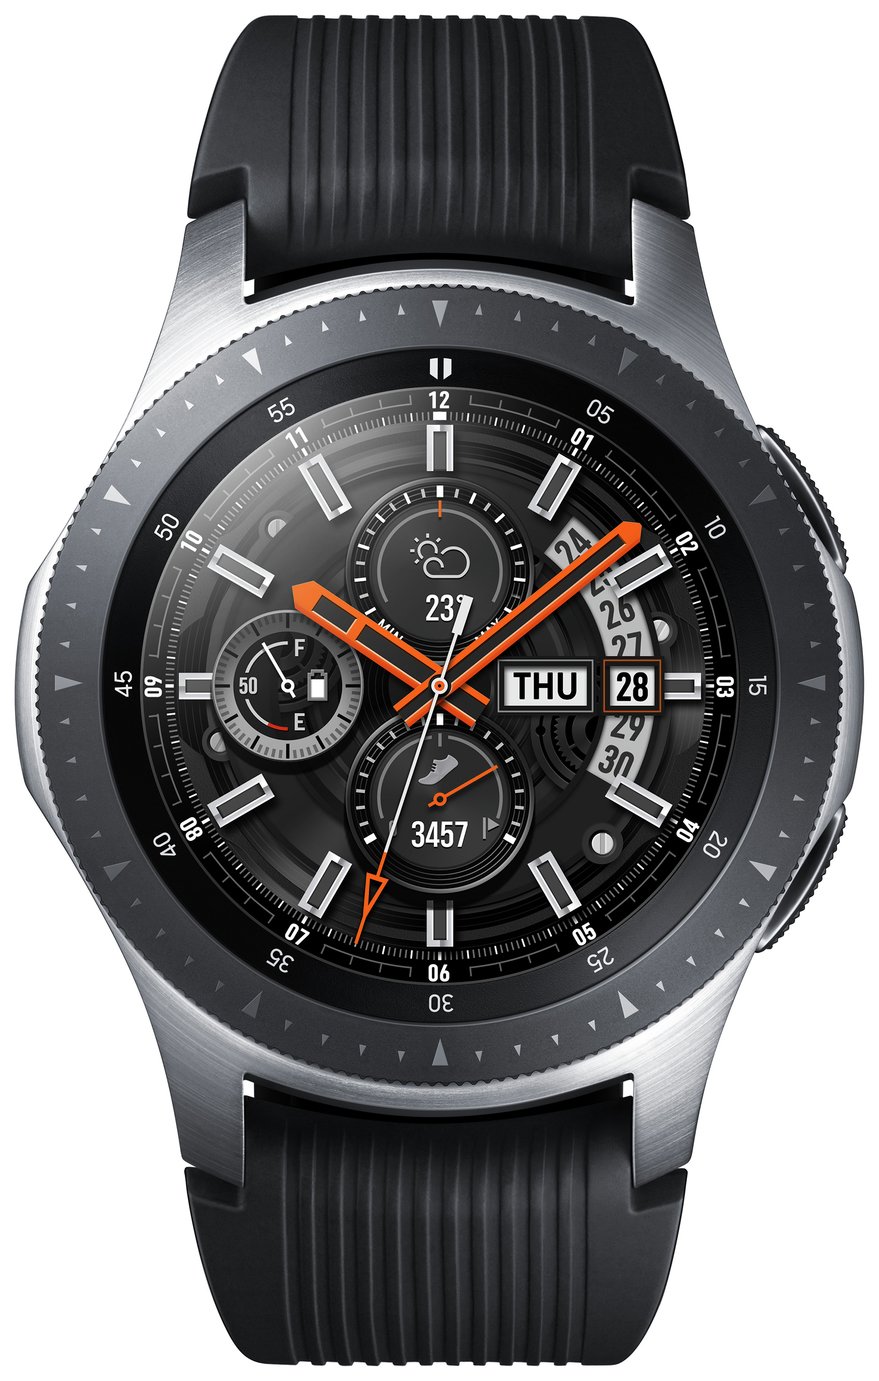 Samsung Galaxy 46mm Smart Watch Review